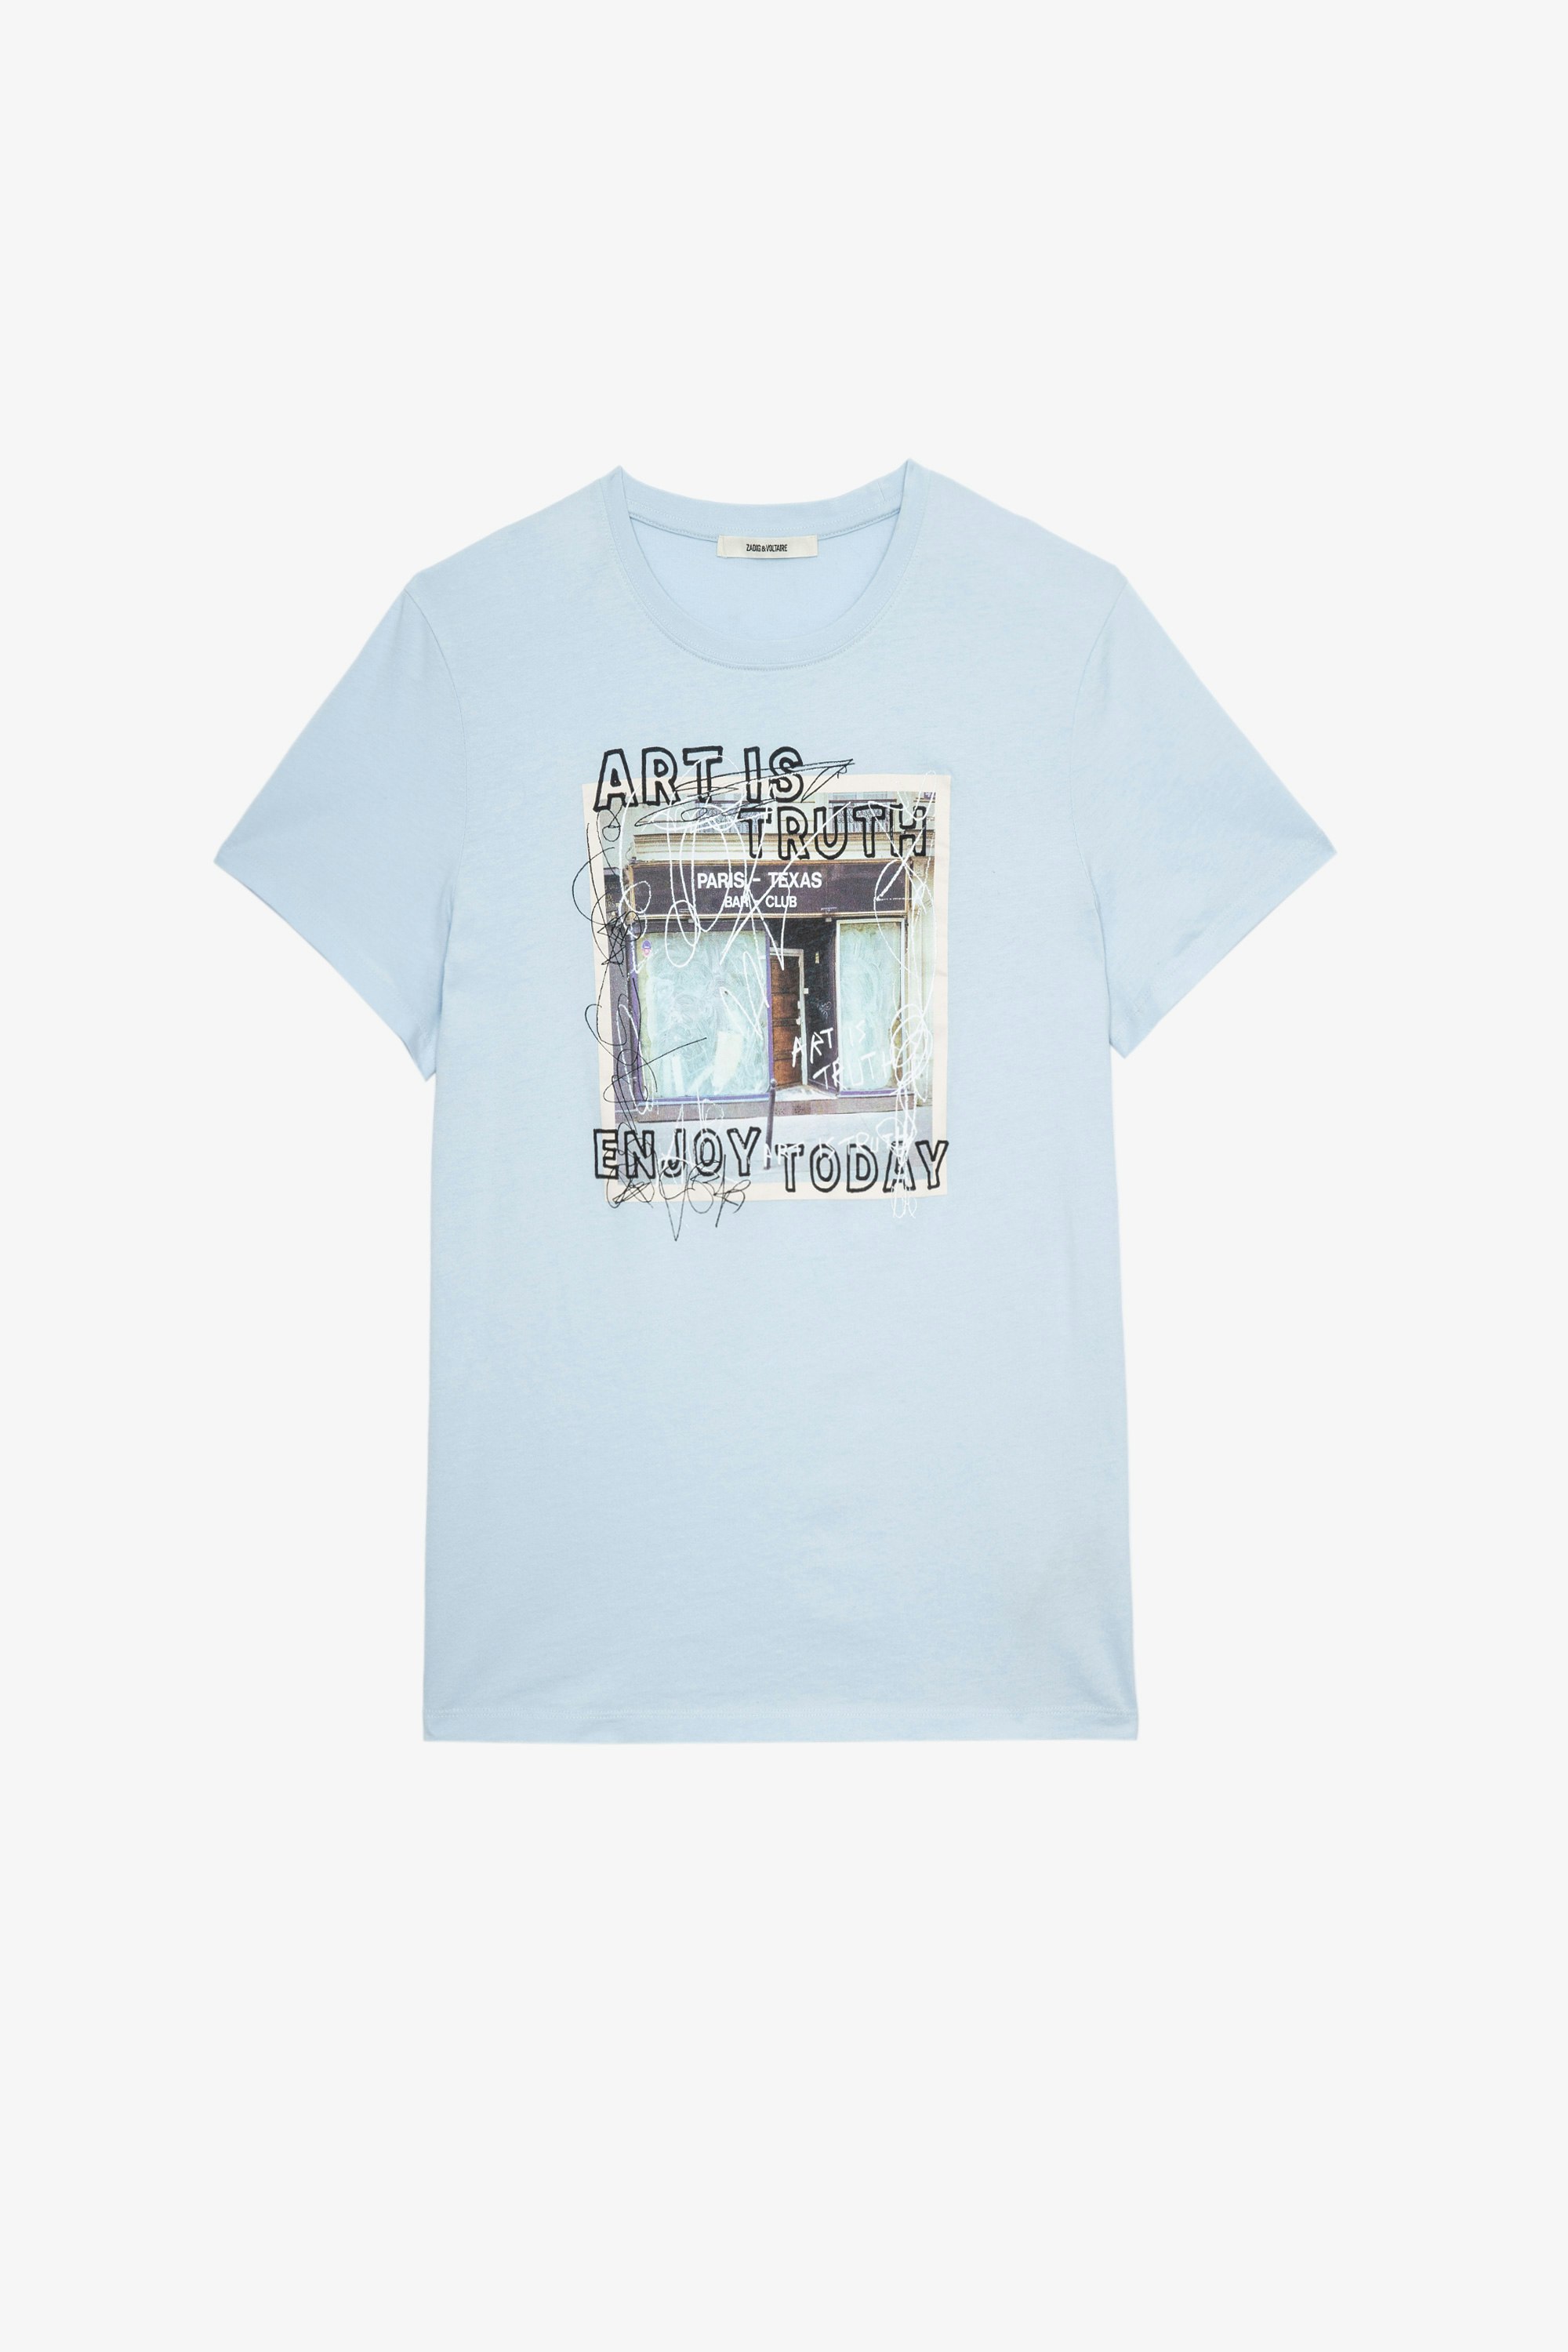 Paris Texas Photoprint Ted Ｔシャツ Men’s light blue cotton photoprint T-shirt